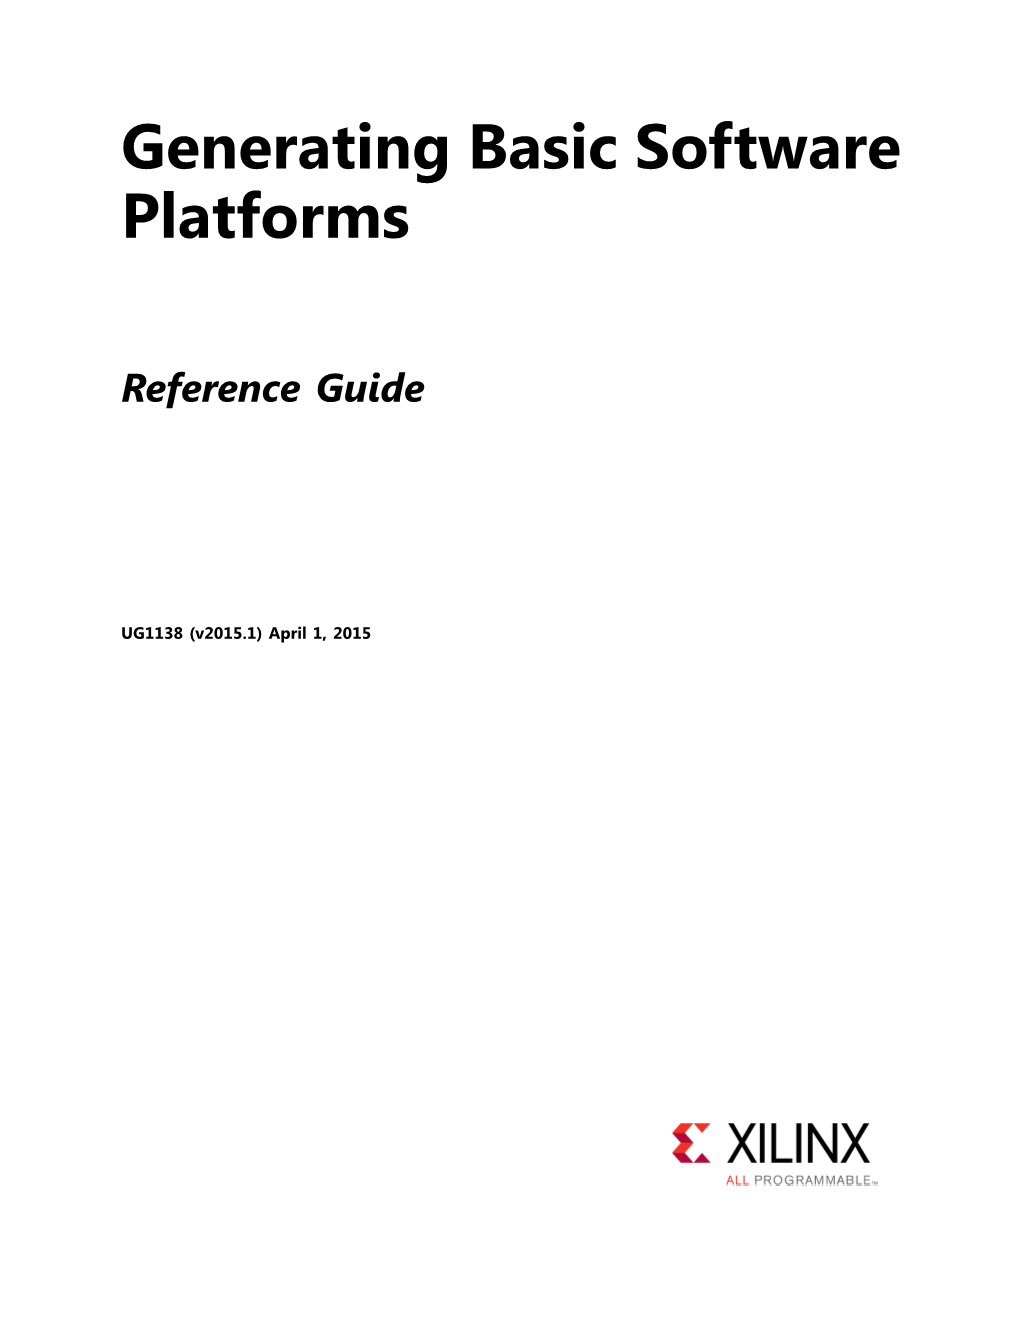 Generating Basic Software Platforms: Reference Guide (UG1138)